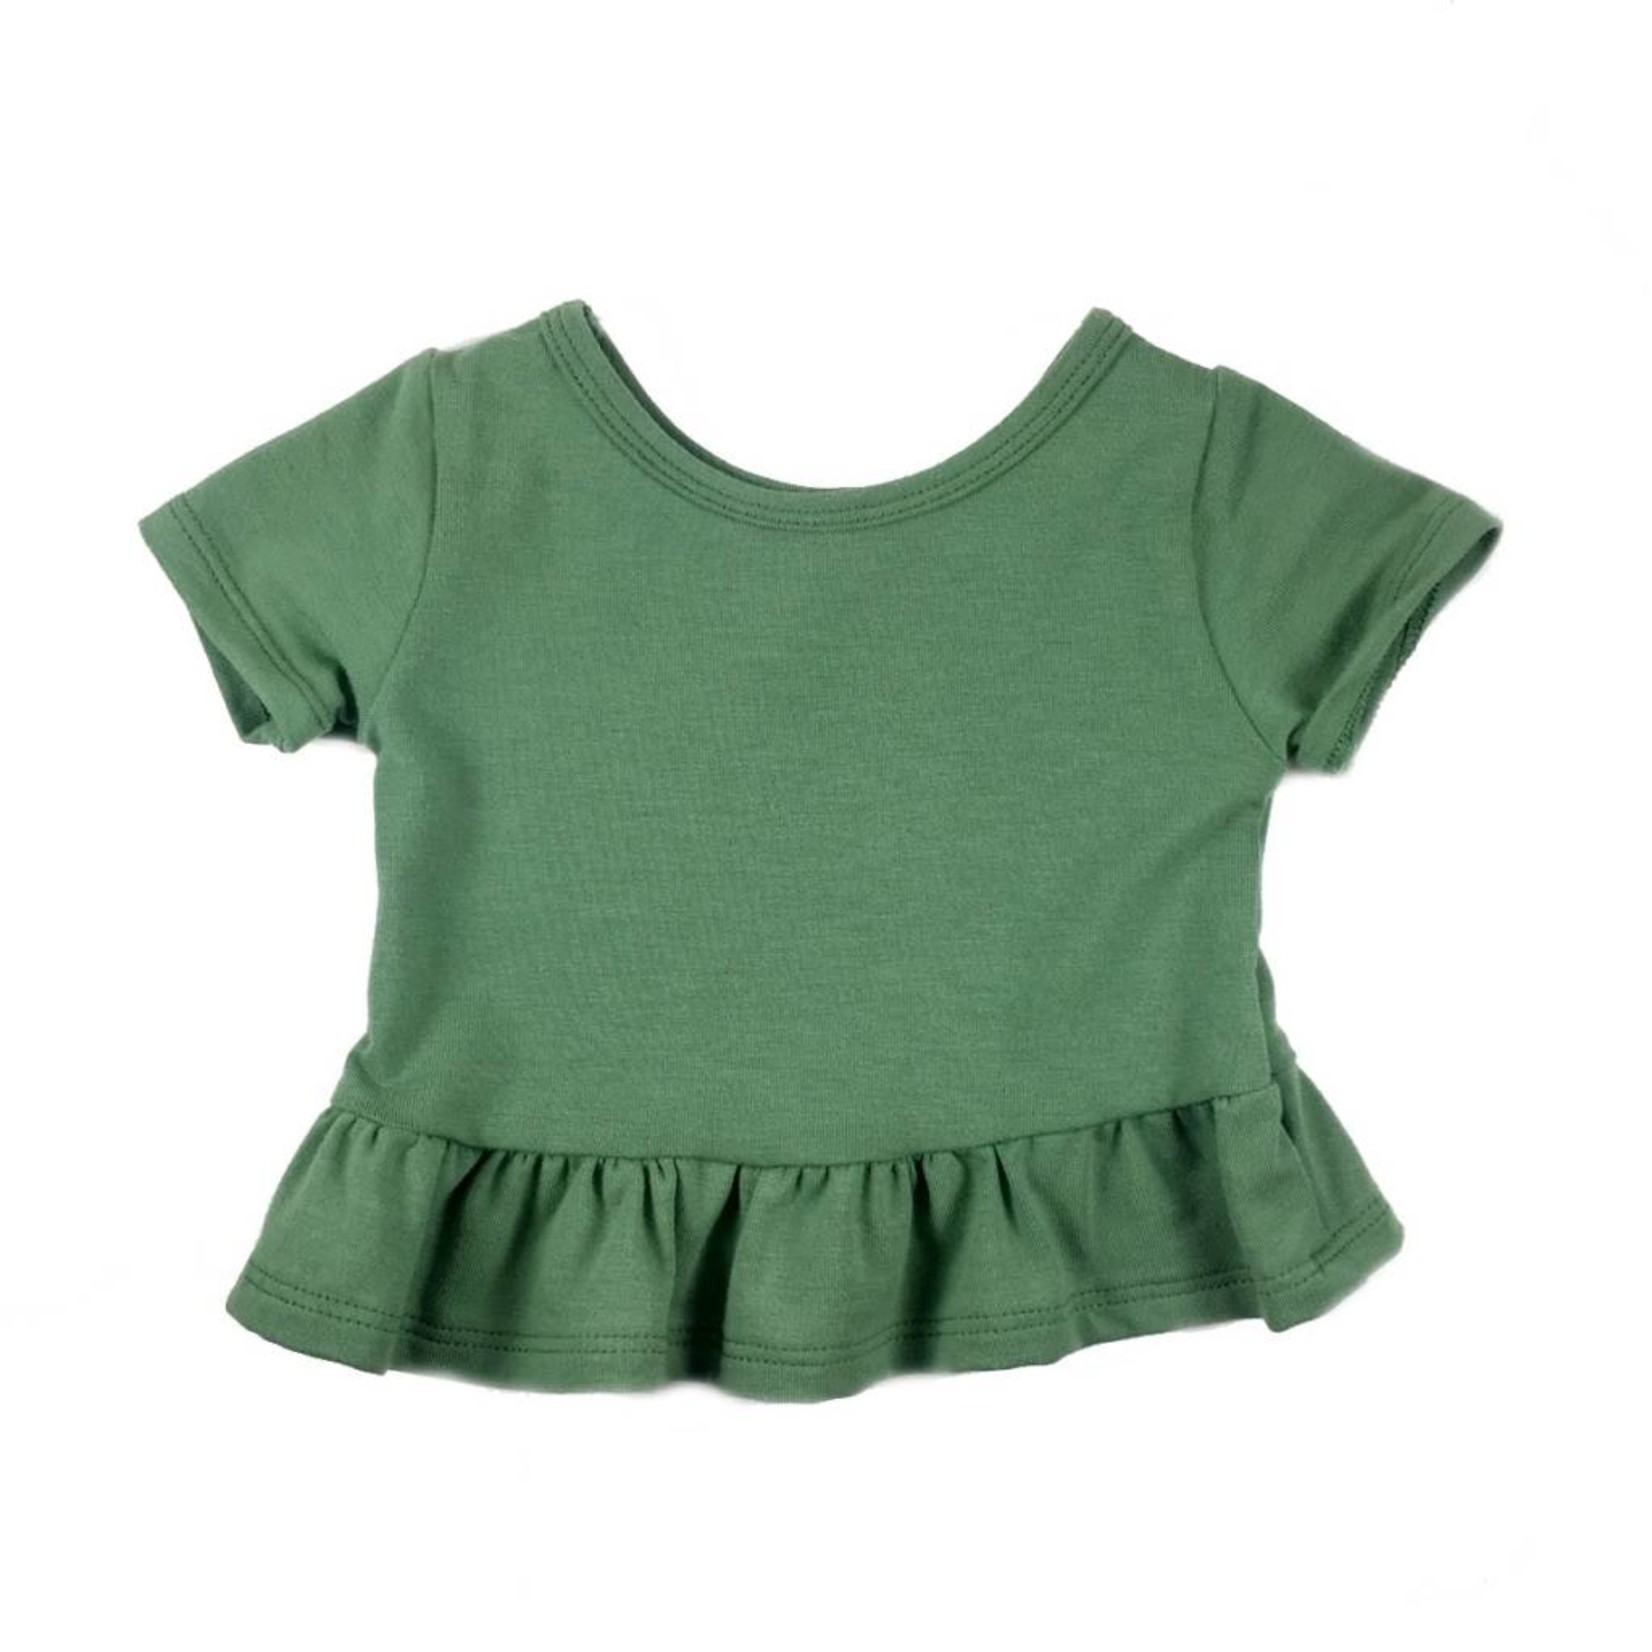 Vivie & Ash Green Peplum Top (Baby/Toddler Fit)